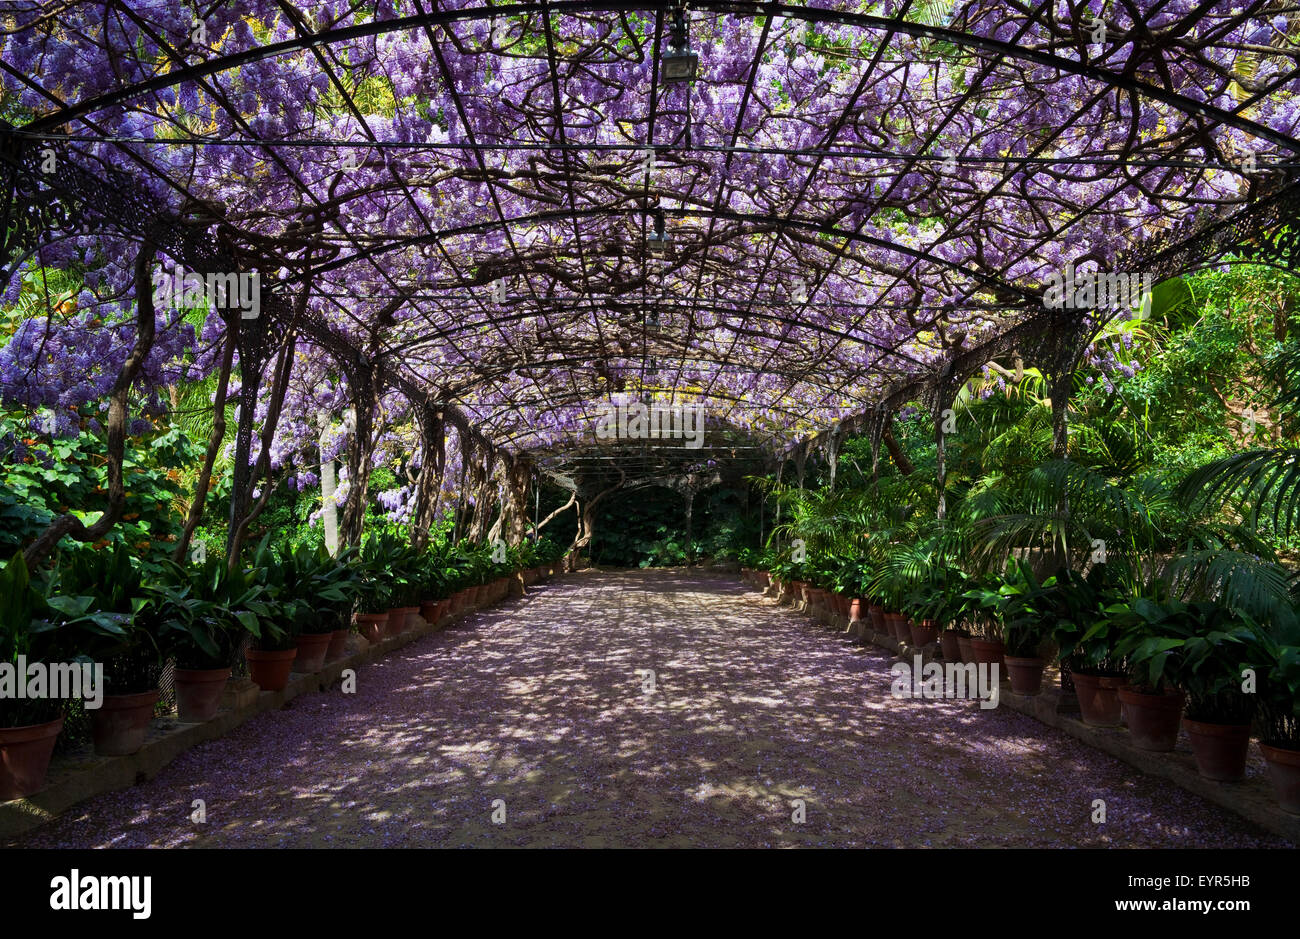 Die Wisteria-Laube in voller Blüte, Botanischer Garten oder Jardin Botanico De La Concepcion, Malaga, Andalusien, Spanien. Stockfoto